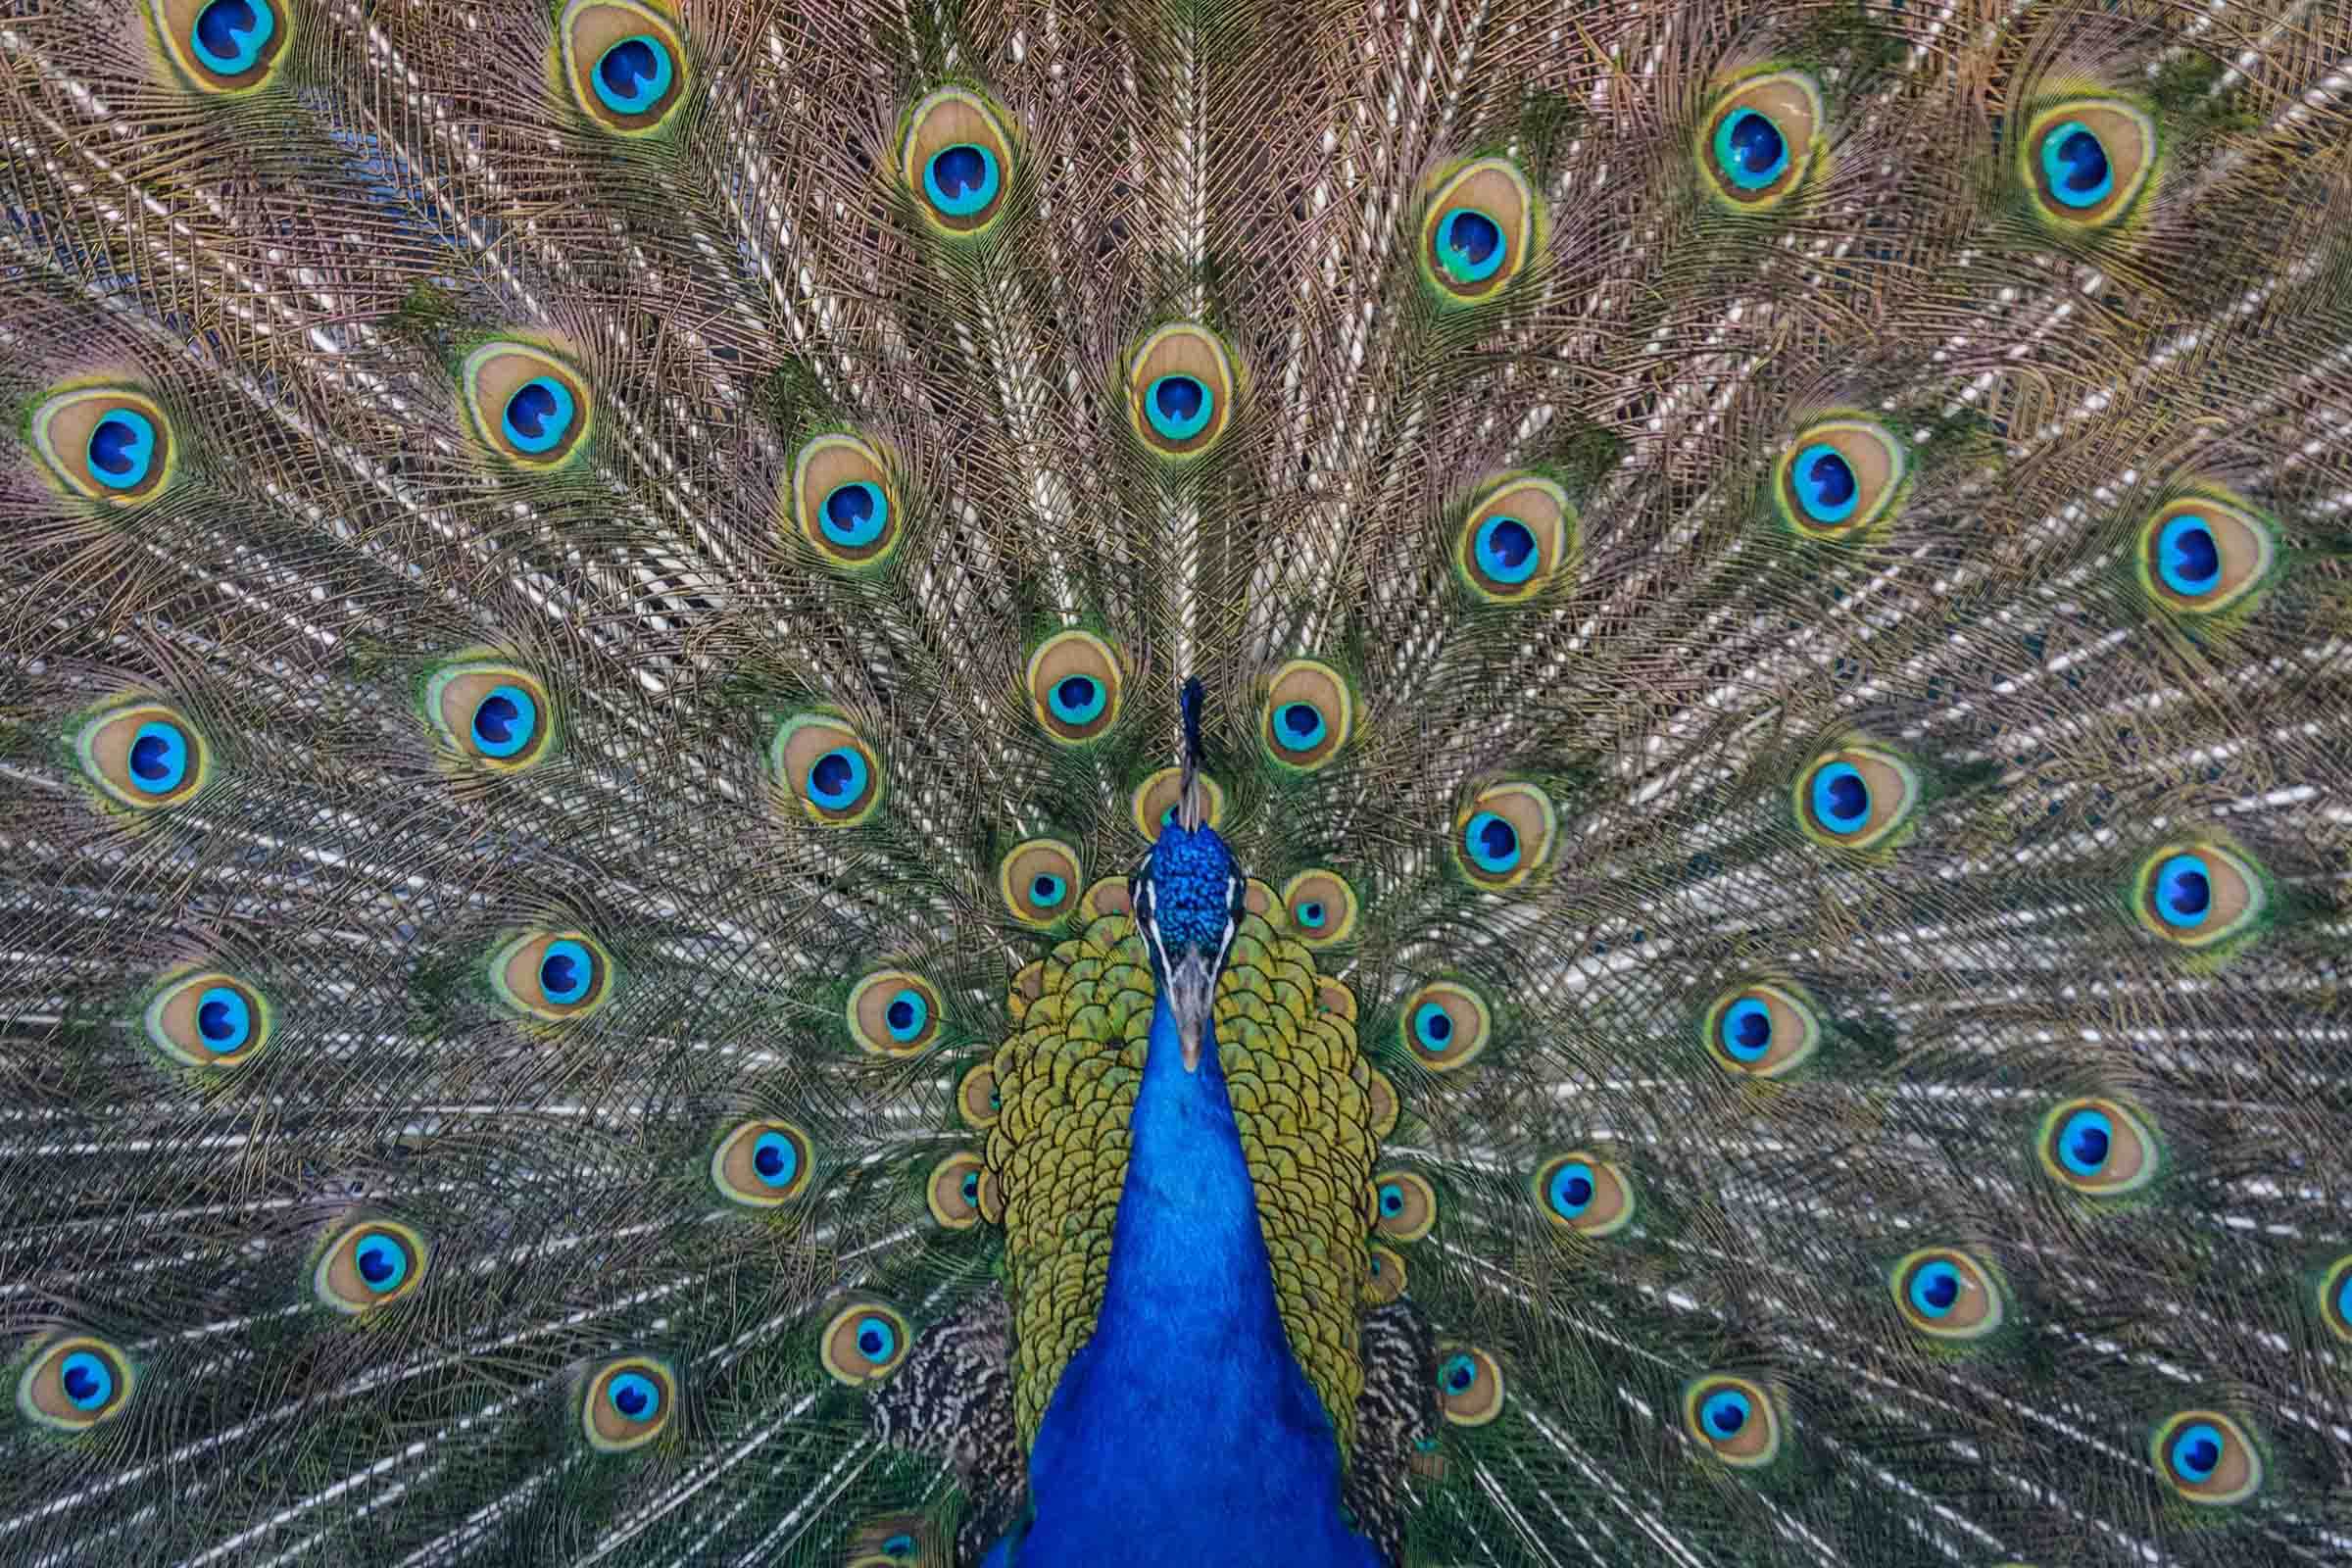 A Beautiful Nusaince: Inside the Coconut Grove Peacock War